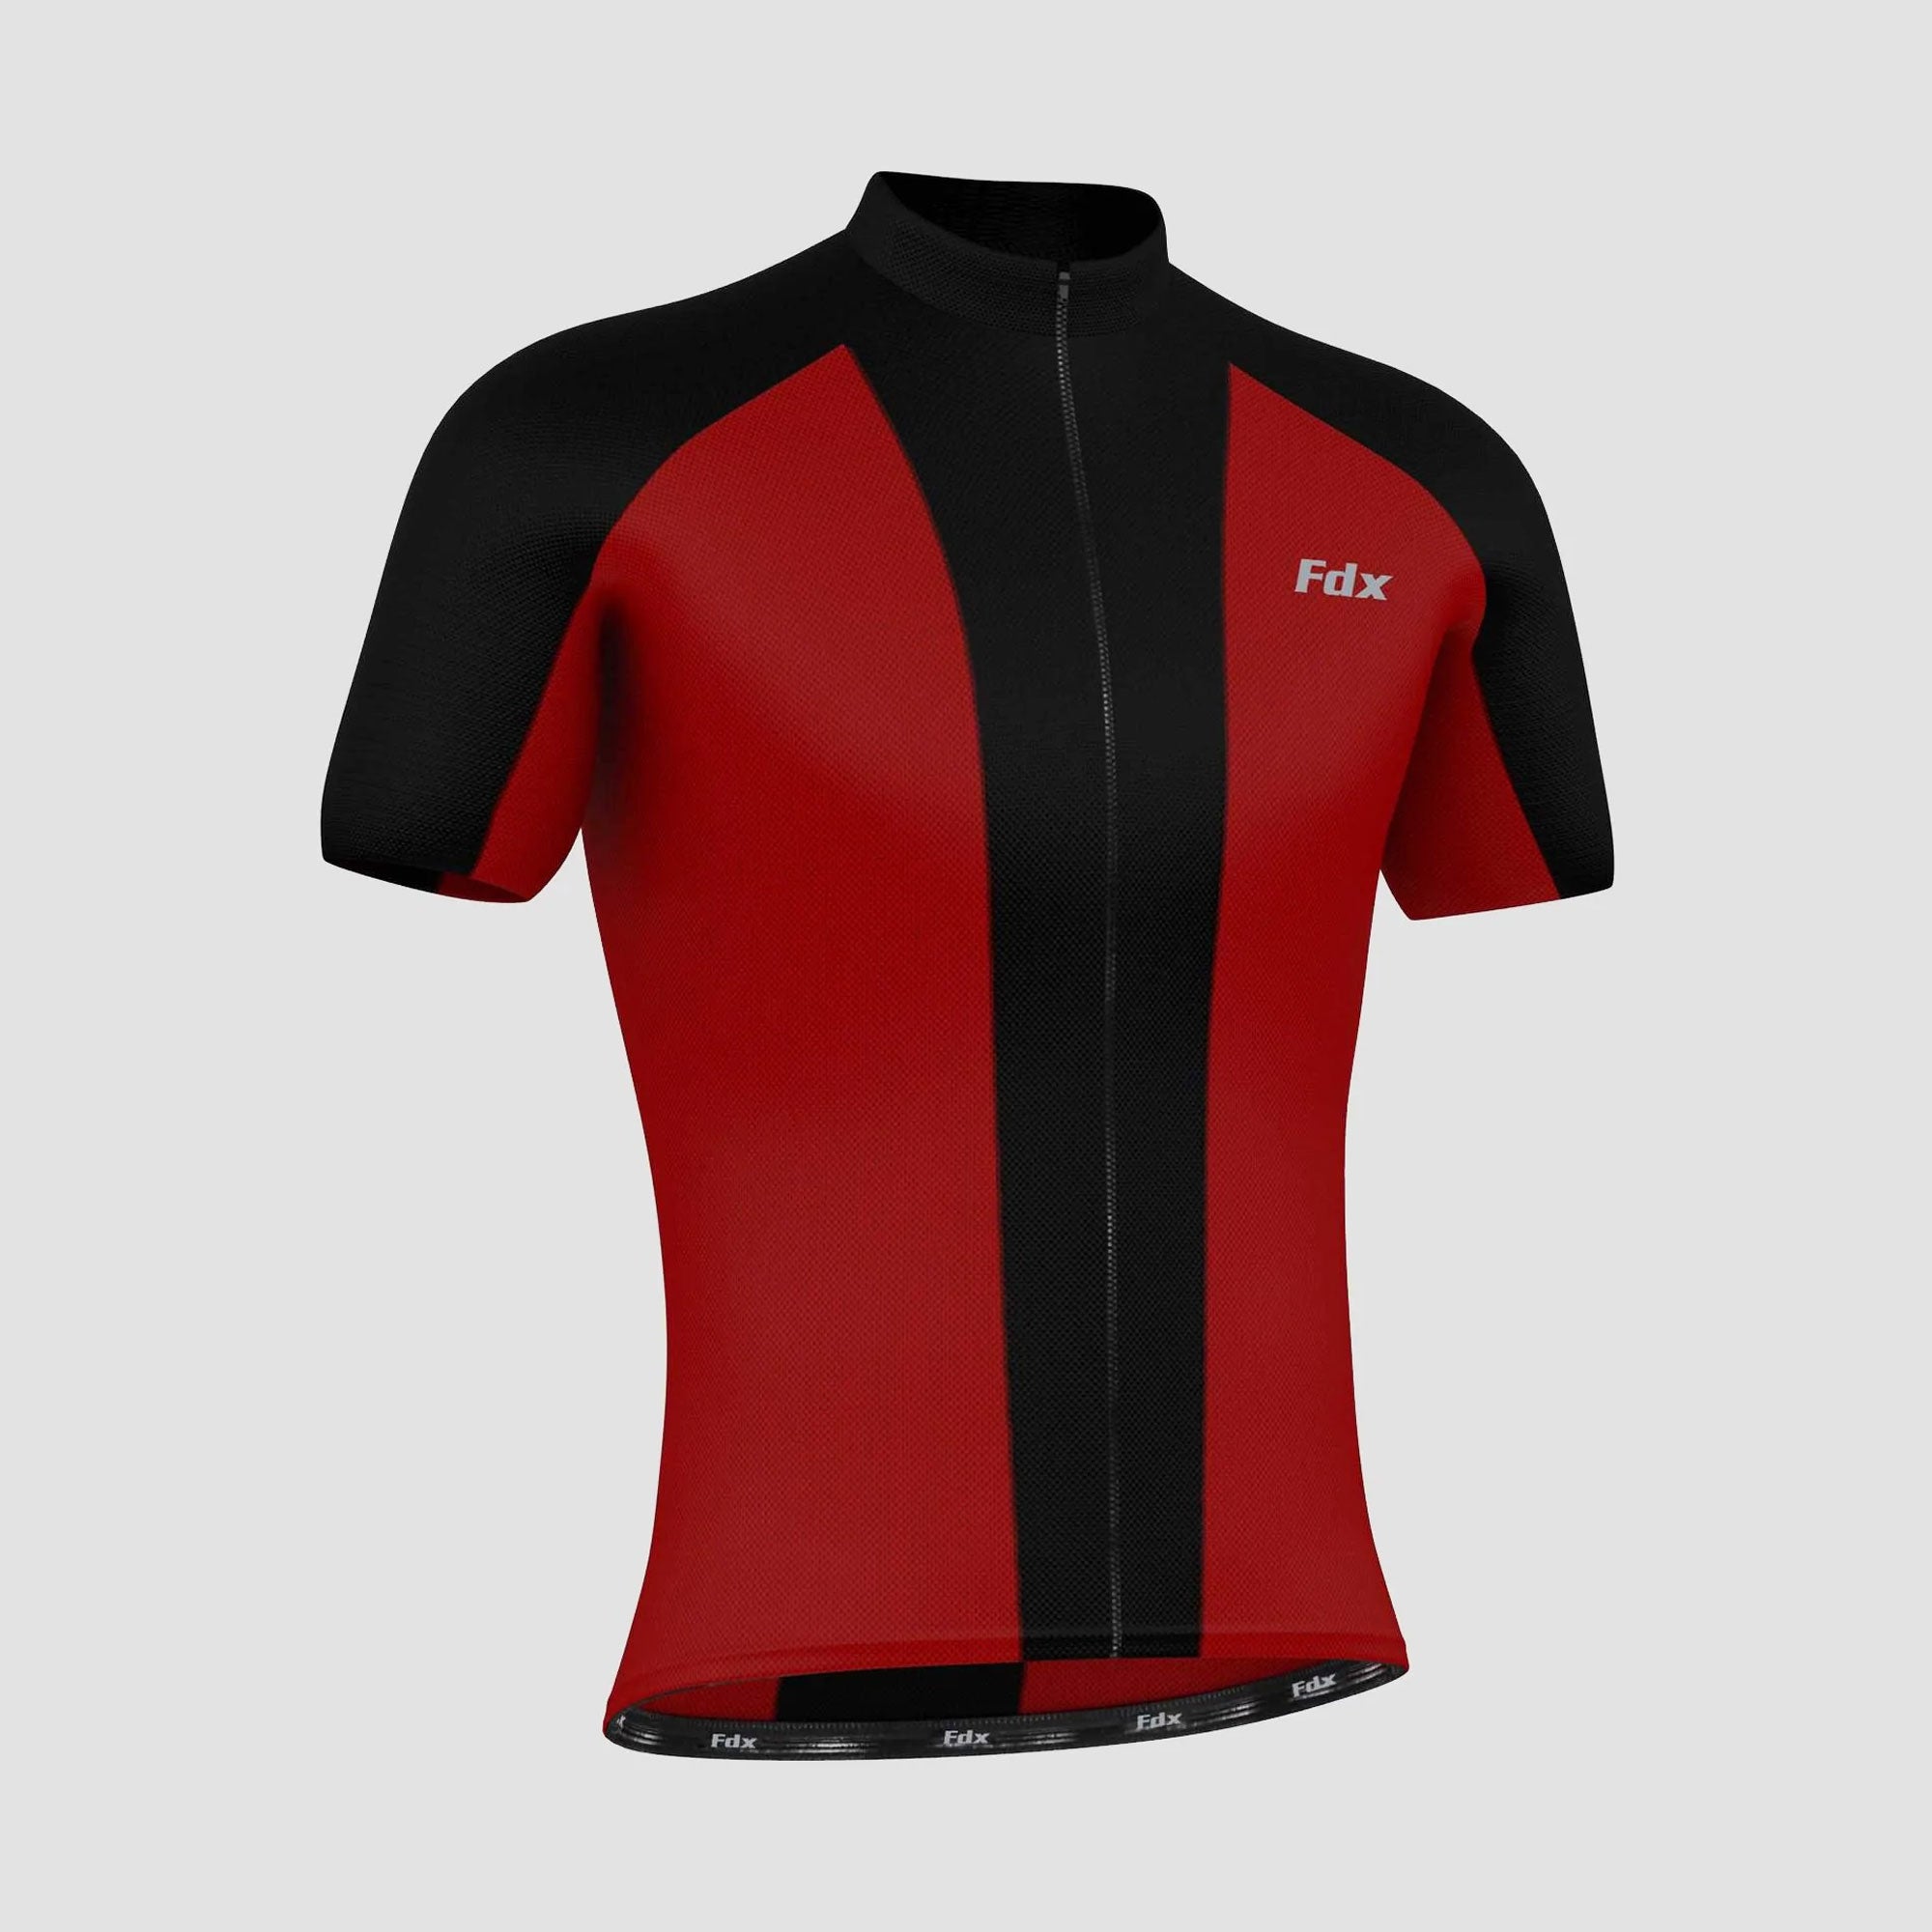 Fdx Brisk Red Men's Short Sleeve Summer Cycling Jersey